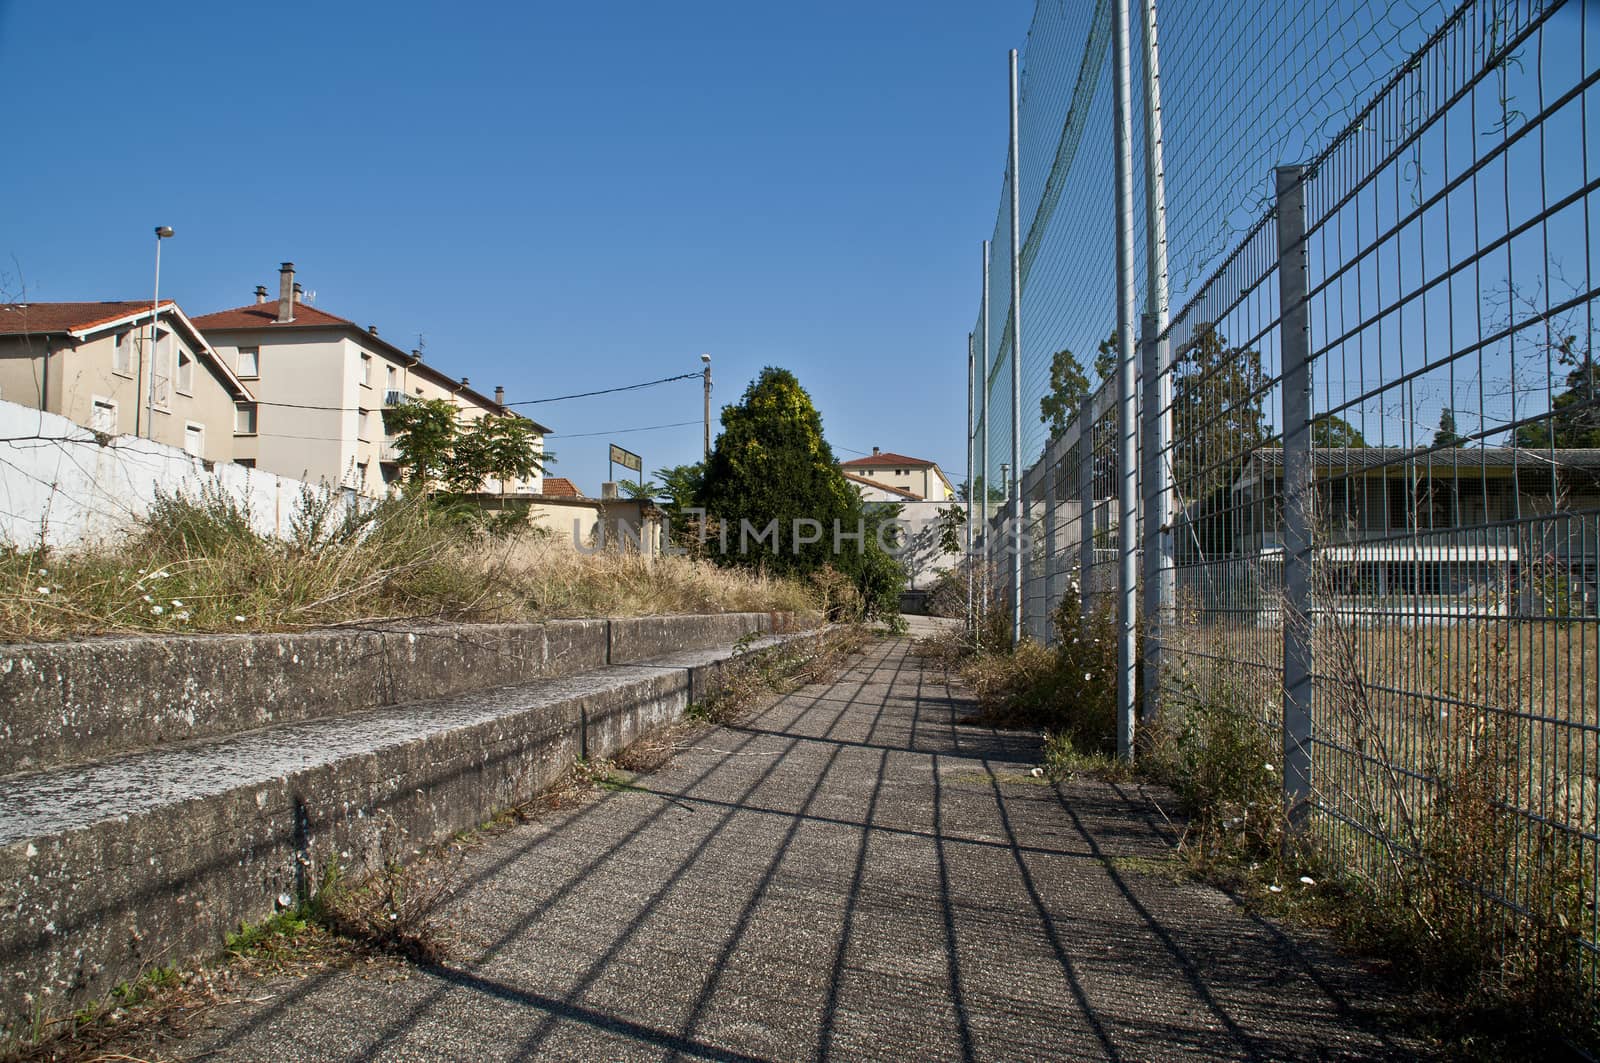 Terraces of the demolished Stade de la Palla football stadium in Valence, France.